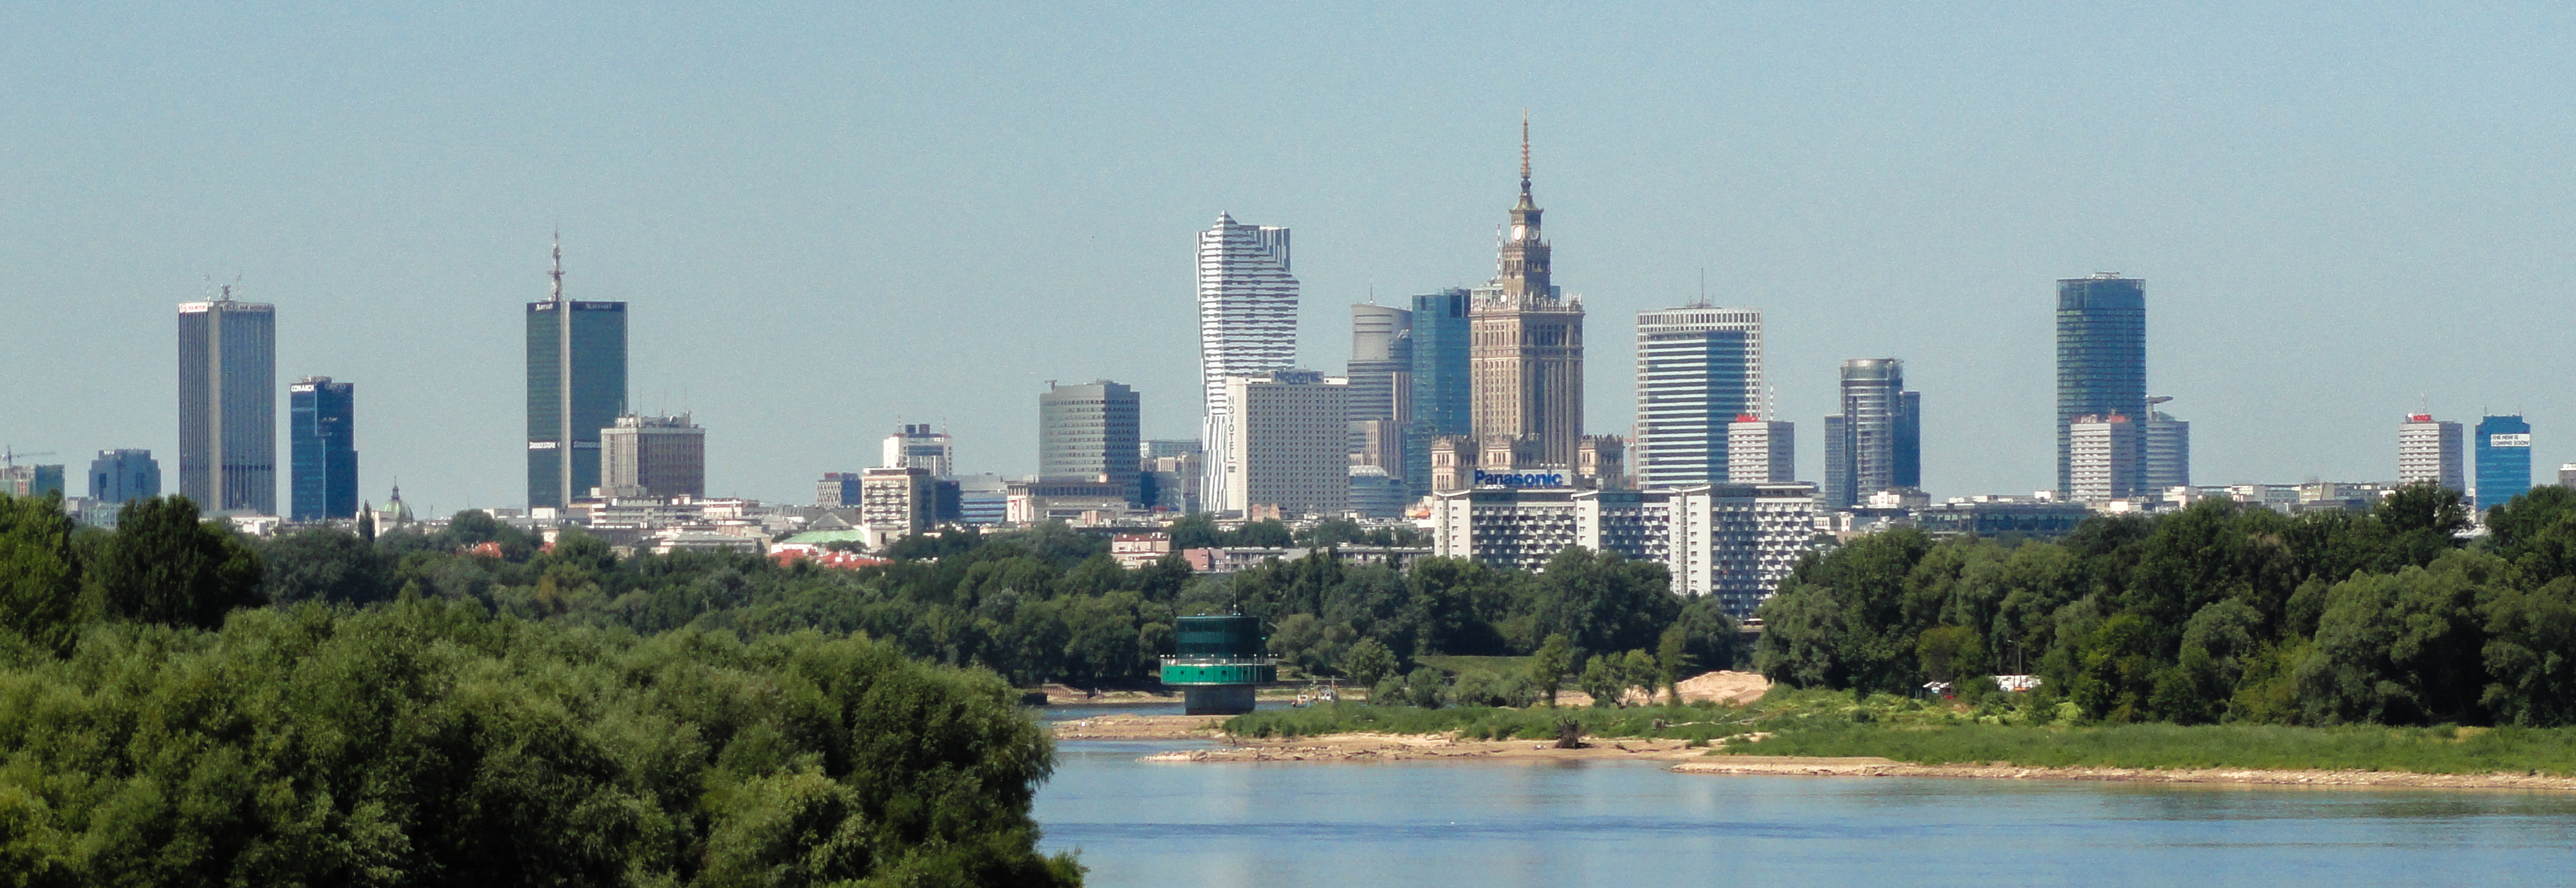 Warsaw #20